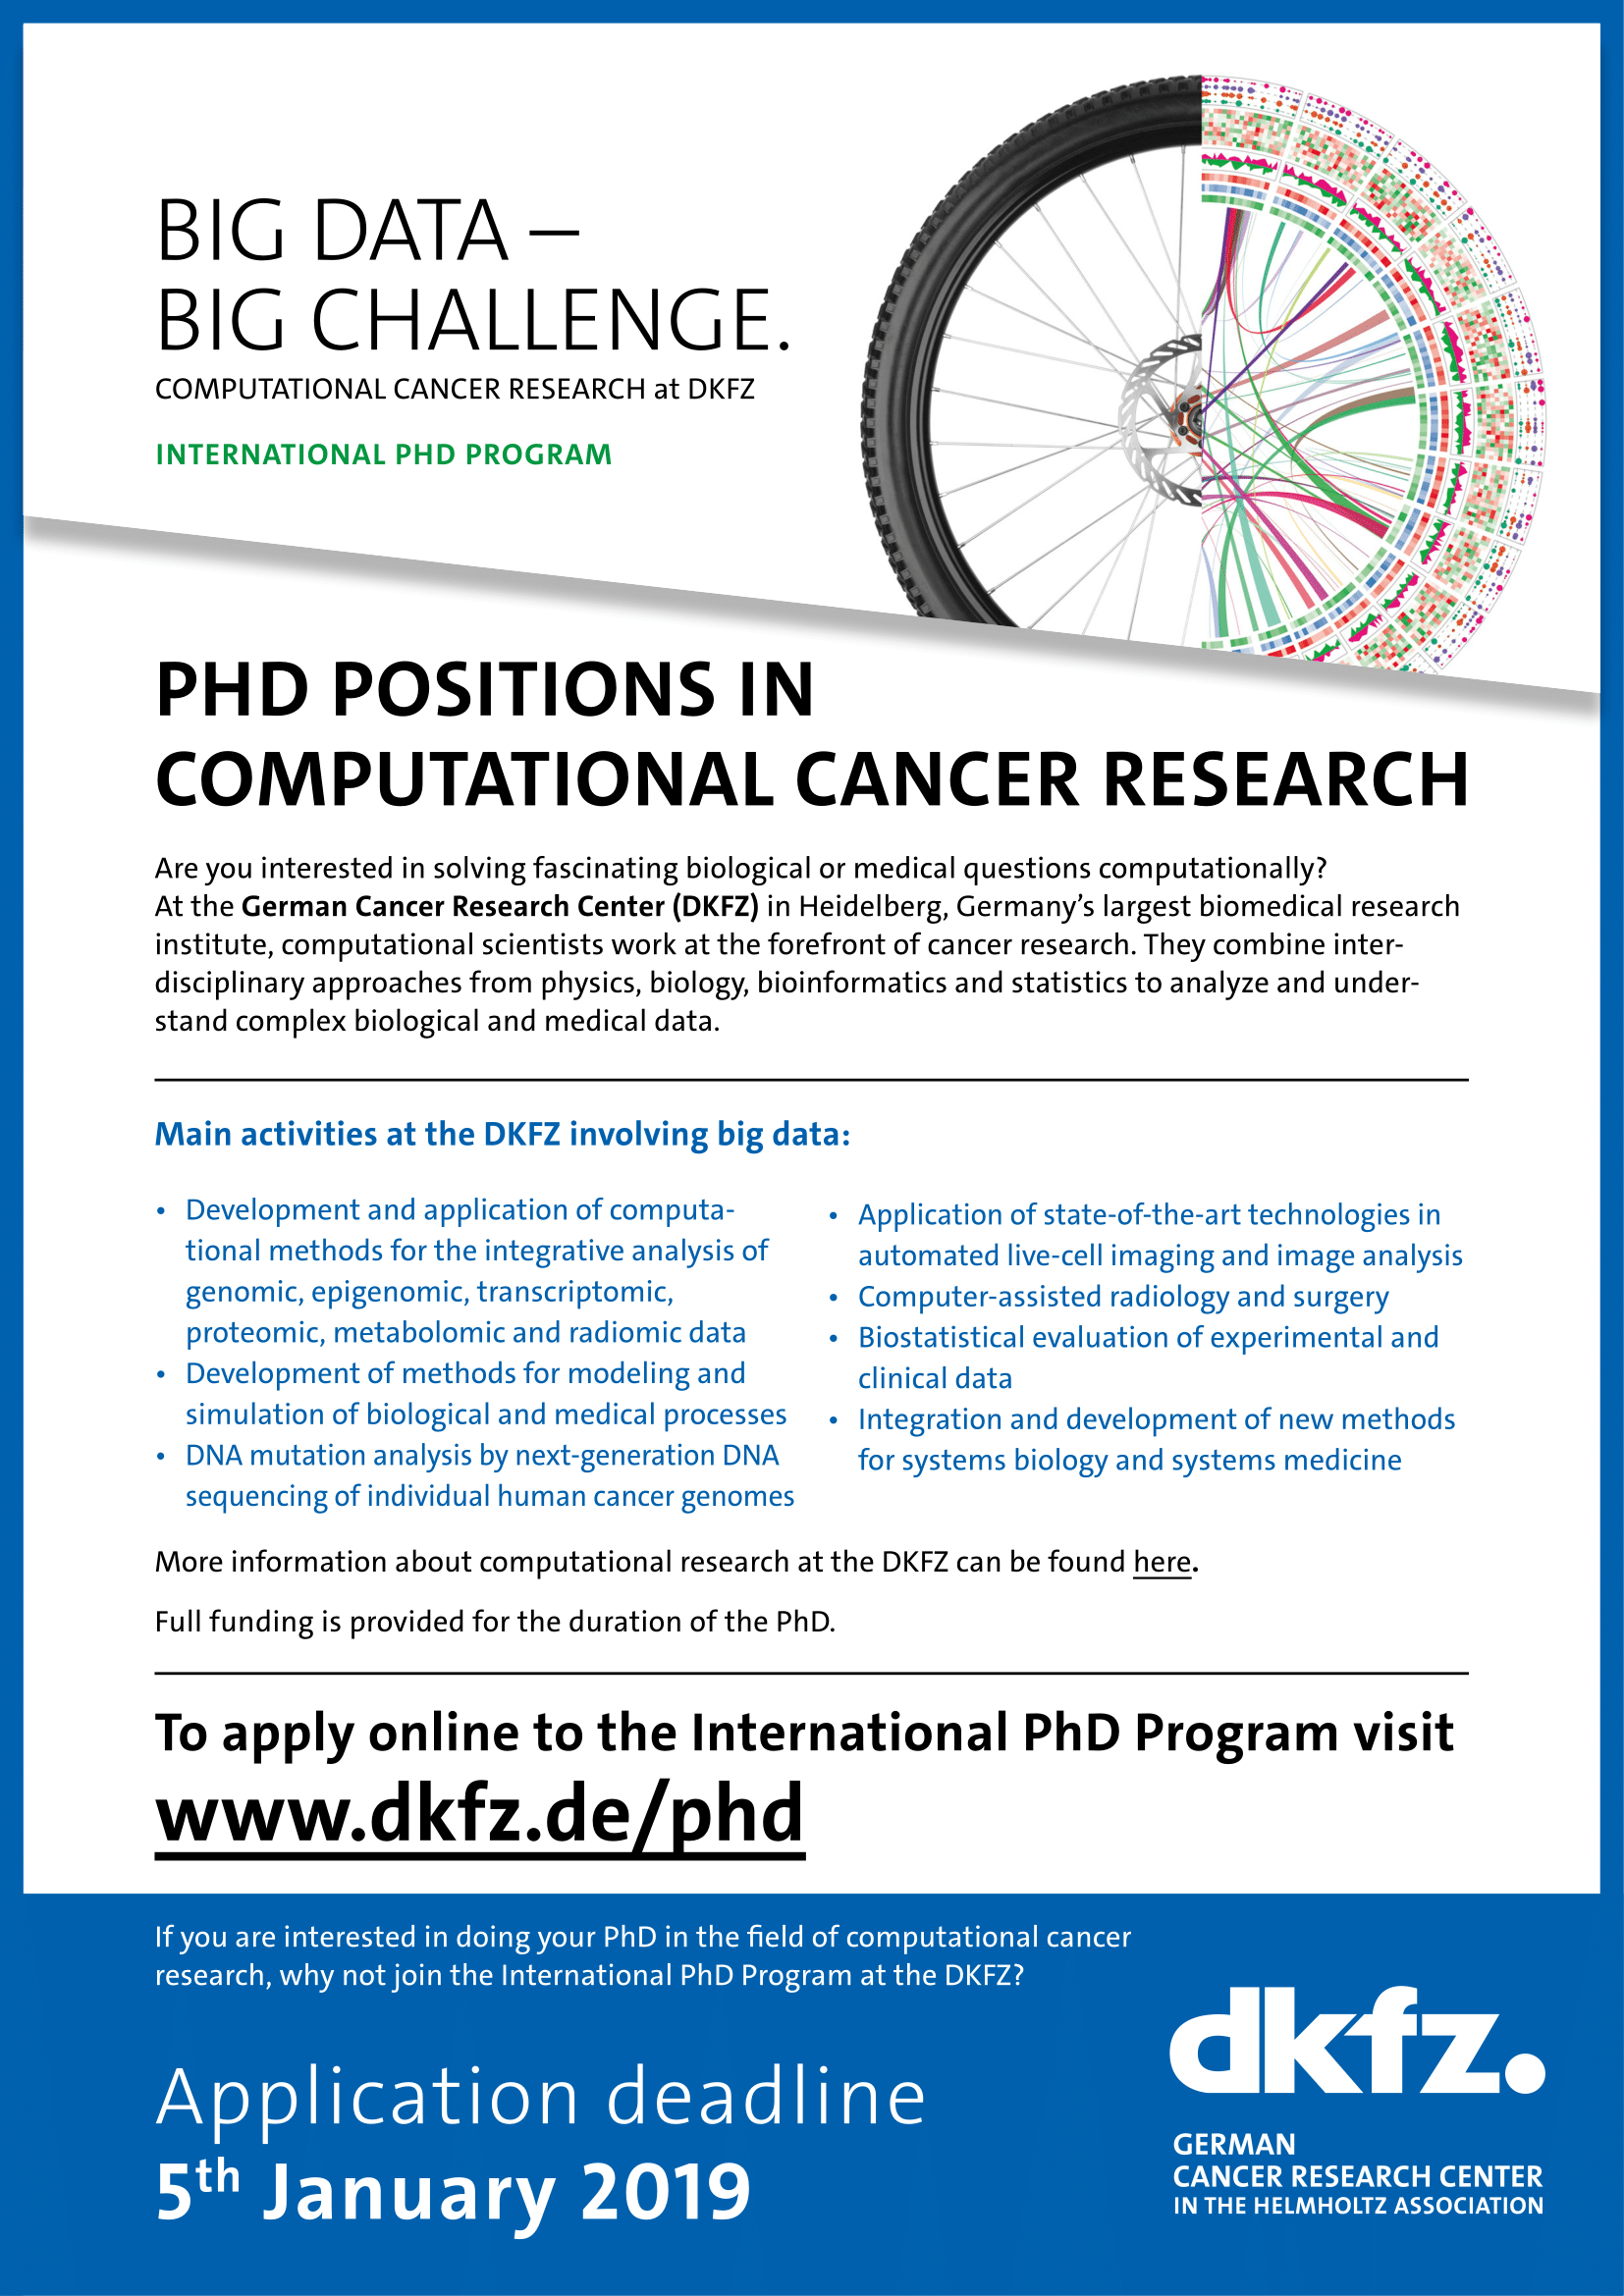 DKFZ PhD Program Computational Cancer Research 1